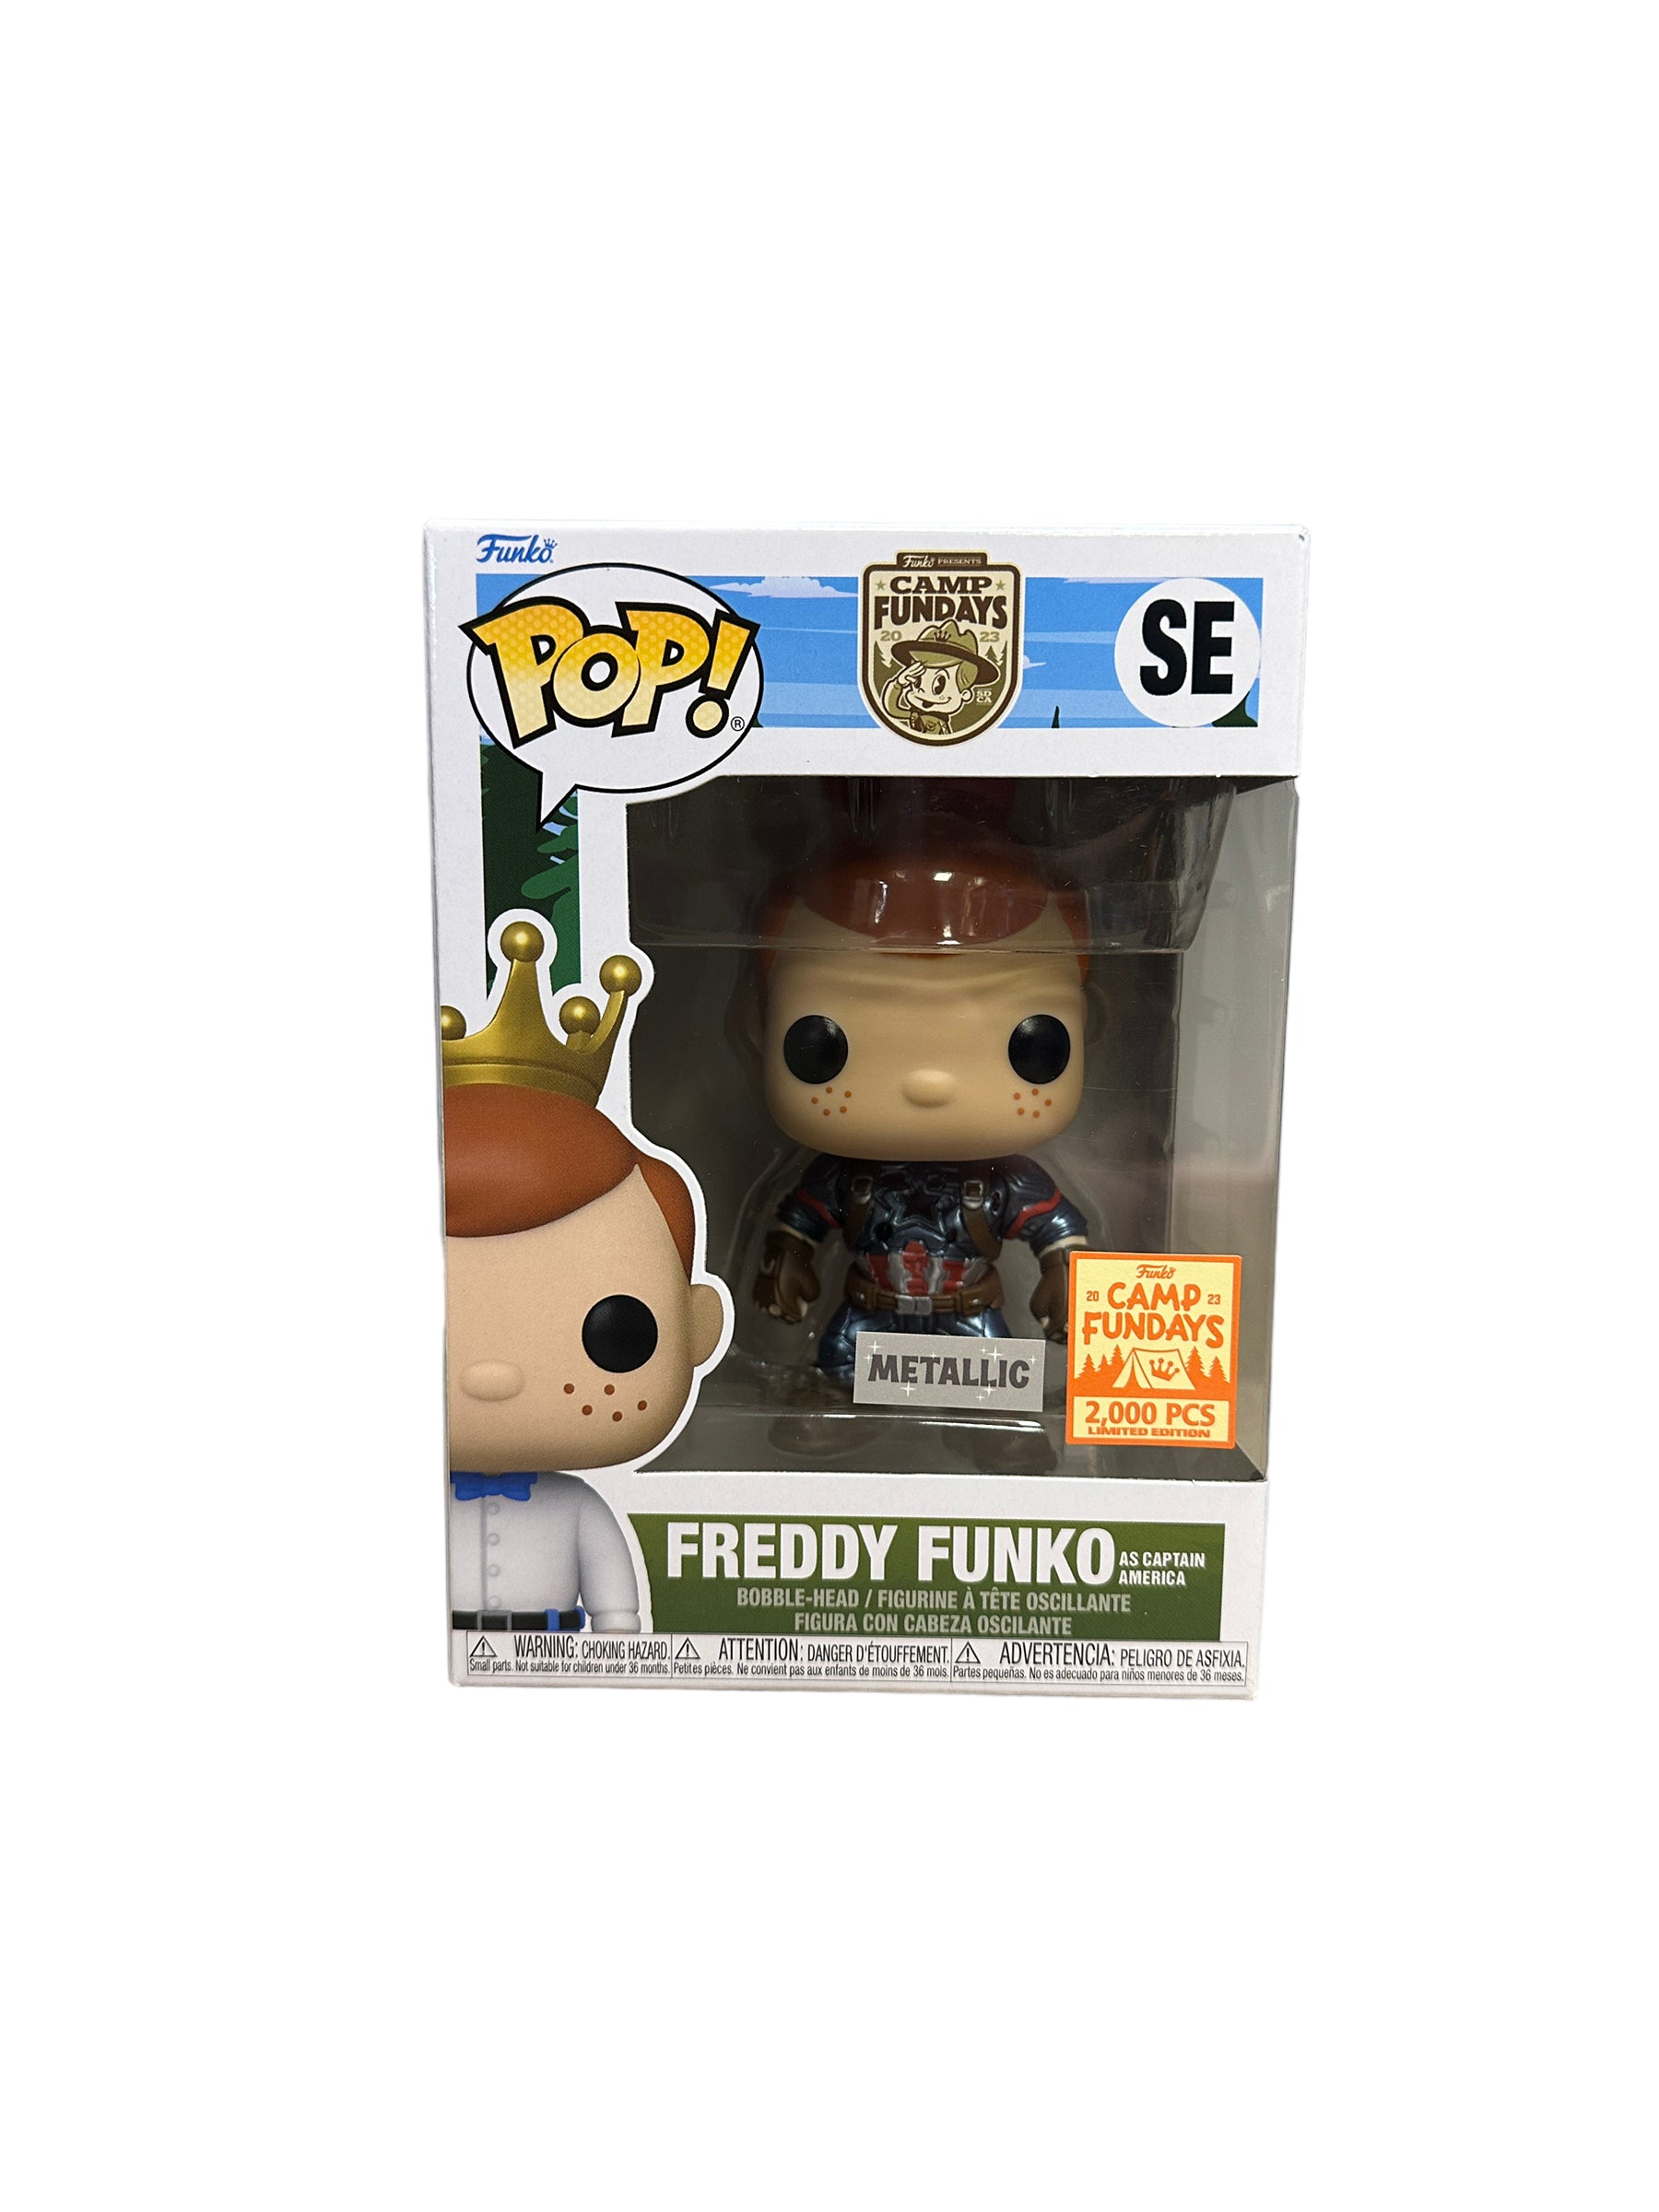 Freddy Funko as Captain America (Metallic) Funko Pop! - Avengers Infinity War - Camp Fundays 2023 Exclusive LE2000 Pcs - Condition 9.5/10